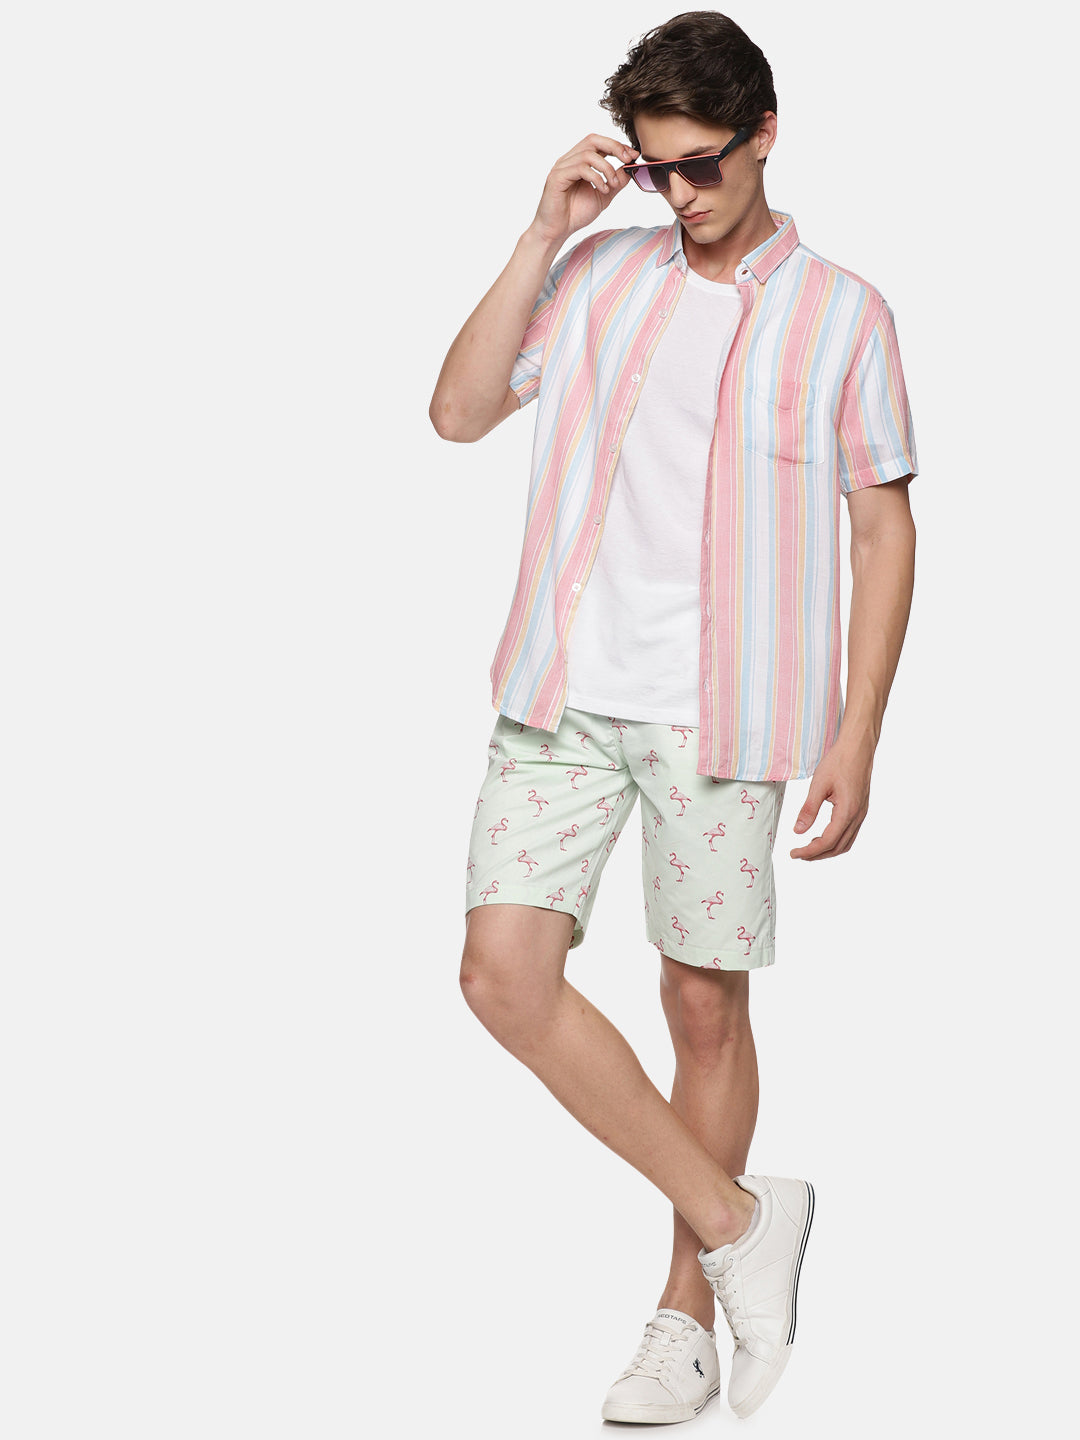 Coastal Men's Flamingo Printed Shorts - Tusok